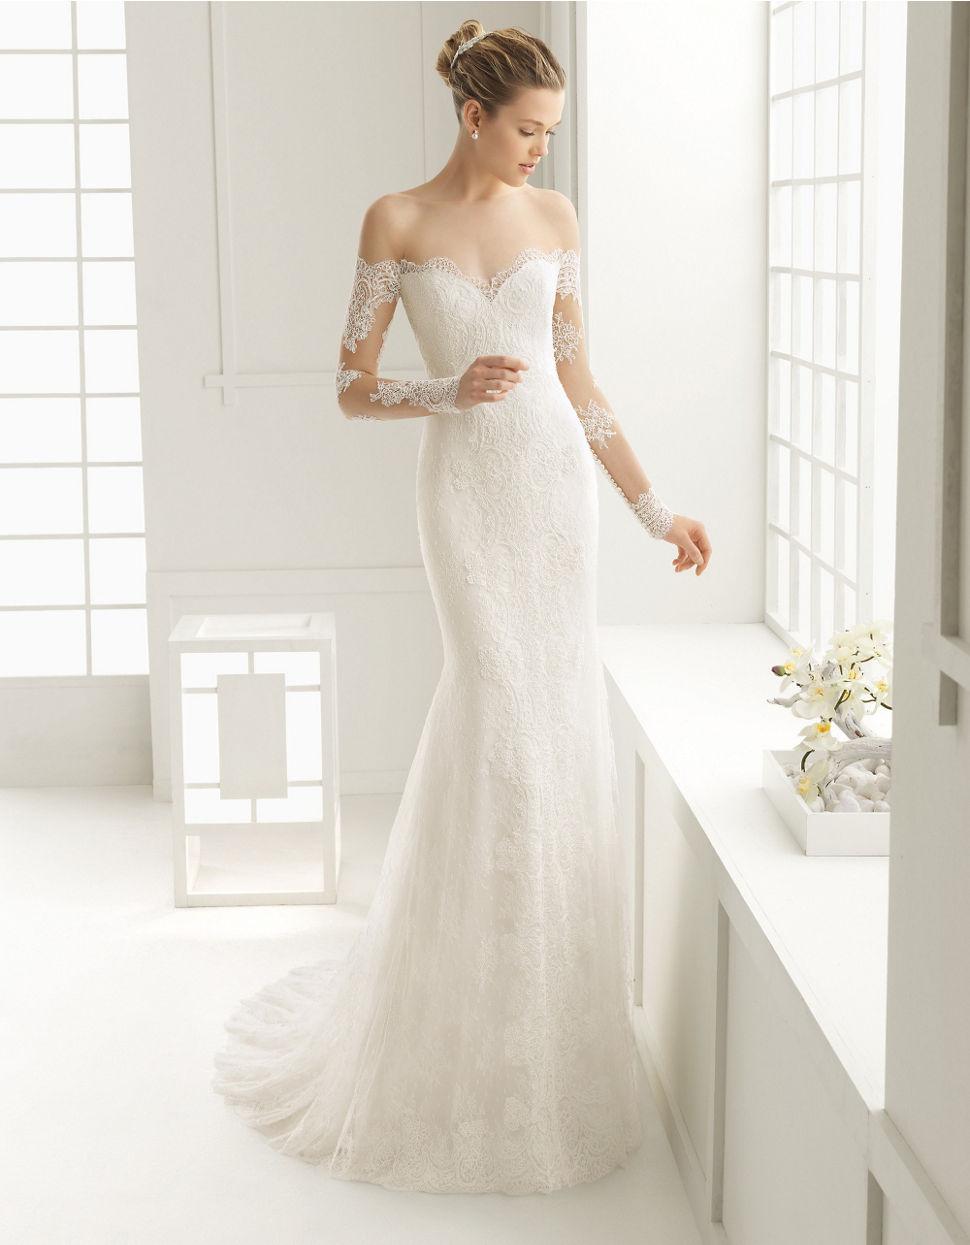 Chantilly lace wedding dress